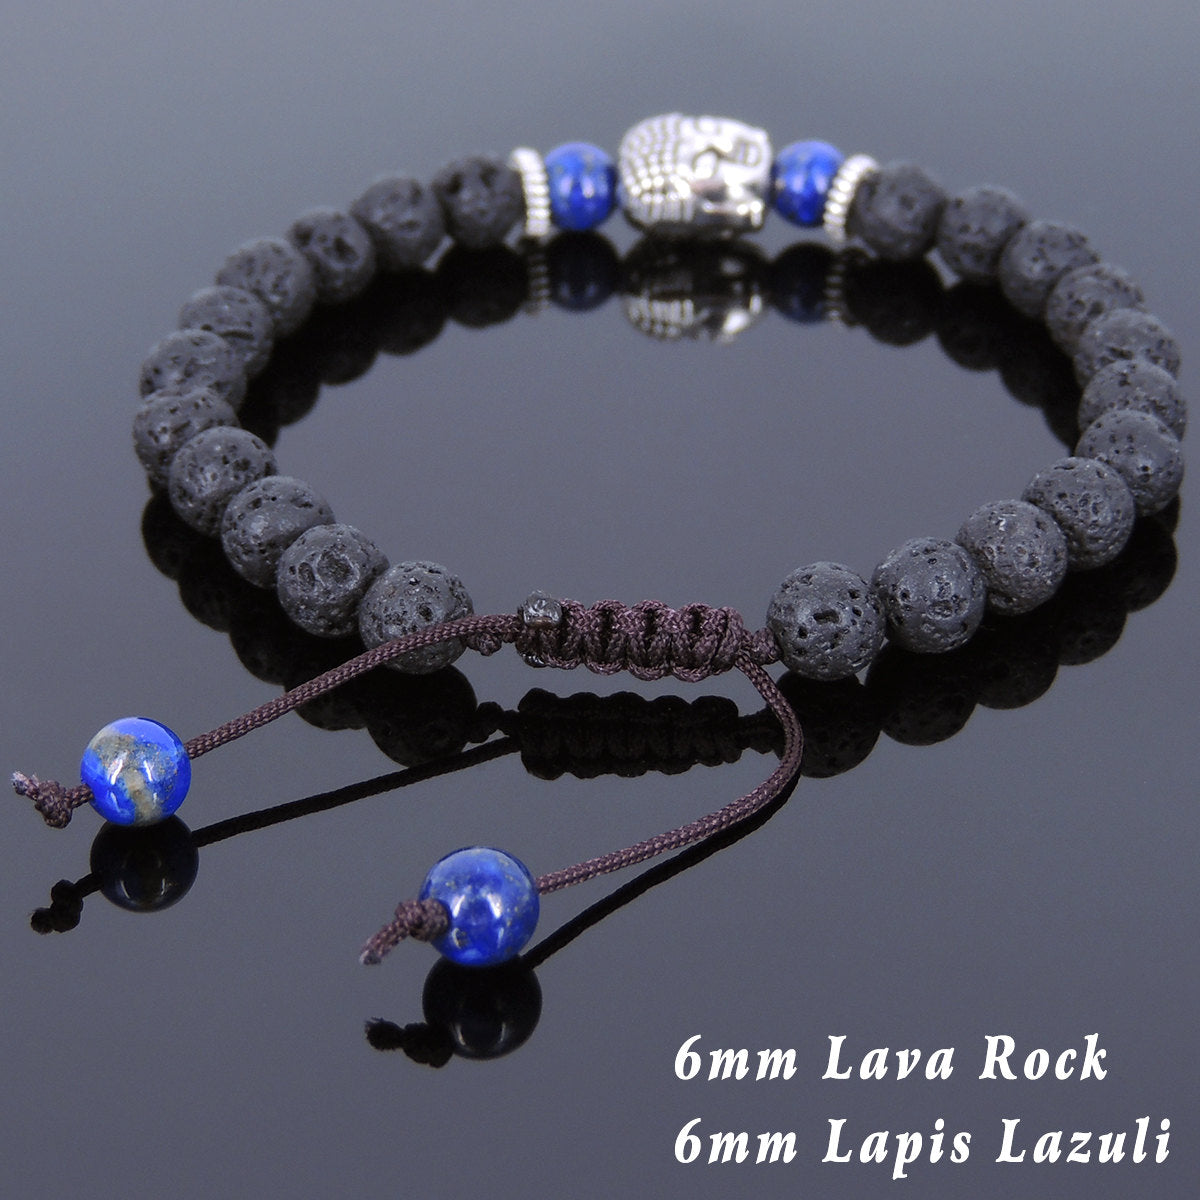 6mm Lapis Lazuli & Lava Rock Adjustable Braided Stone Bracelet with Tibetan Silver Spacers & Sakyamuni Buddha Bead - Handmade by Gem & Silver TSB226